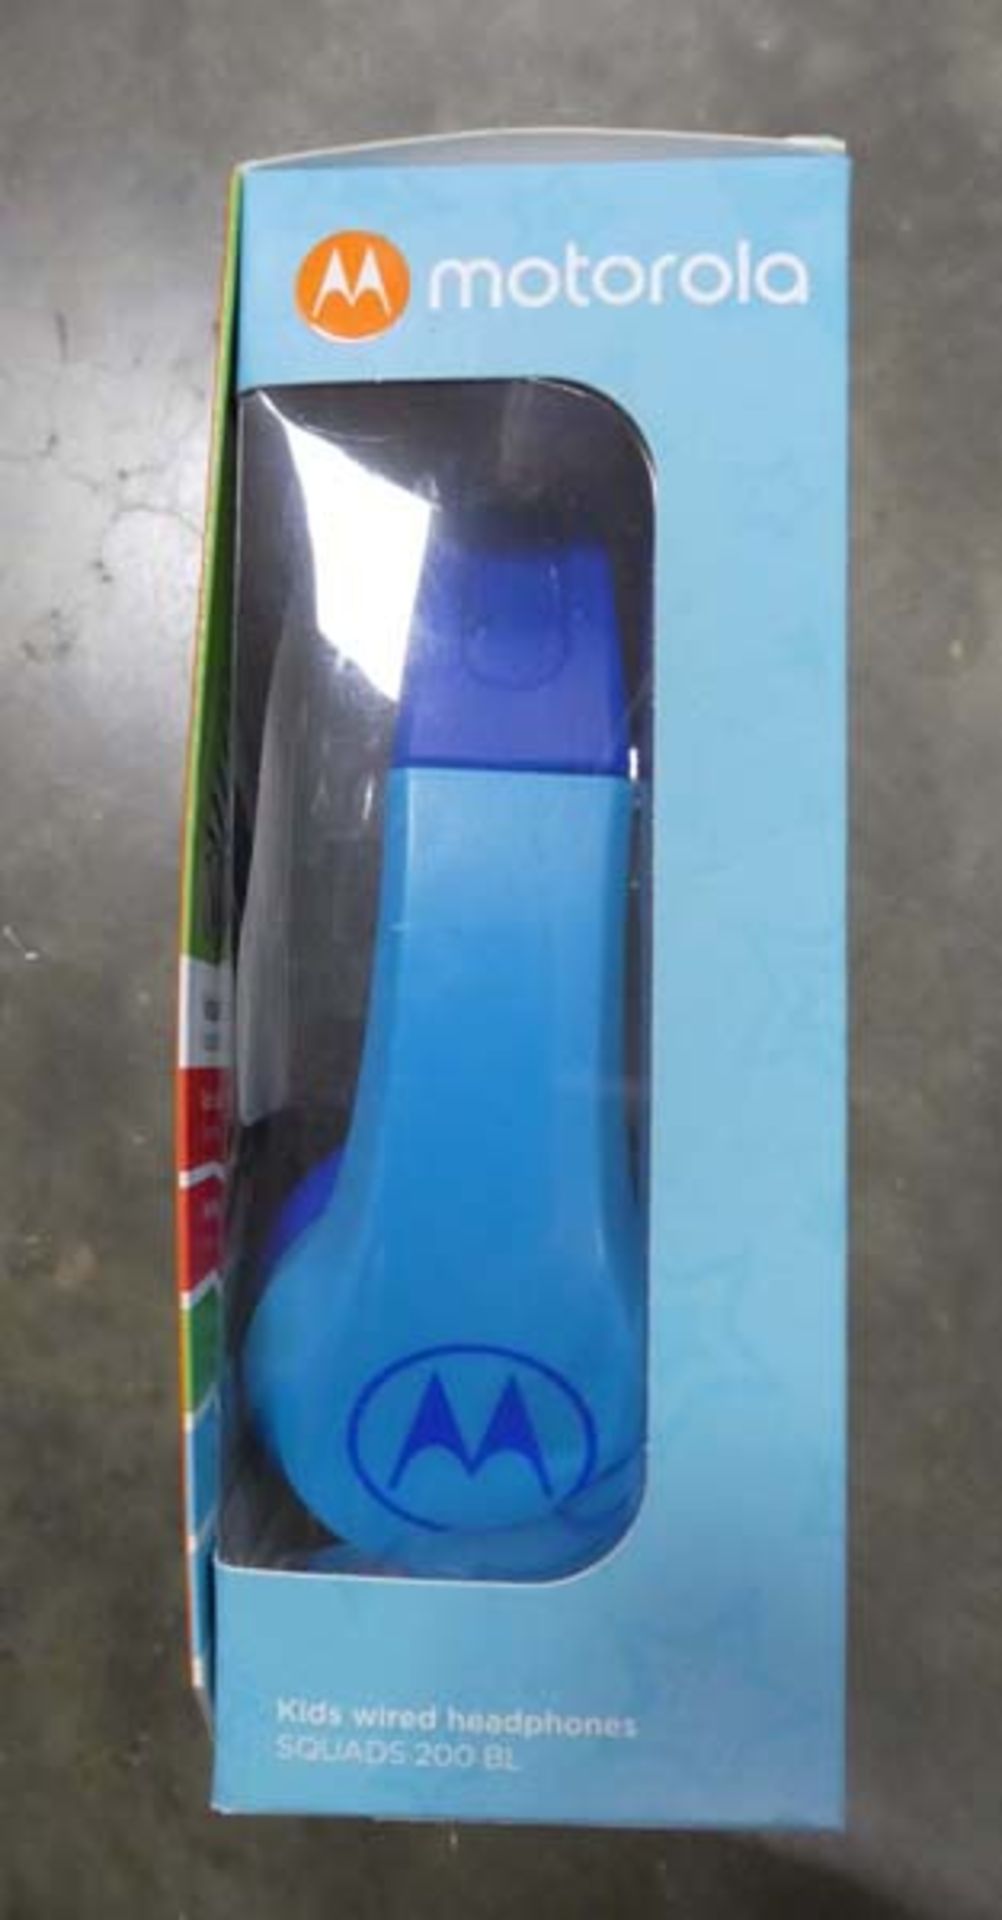 Motorola squads 200bl kids wired headphones in box - Image 2 of 2